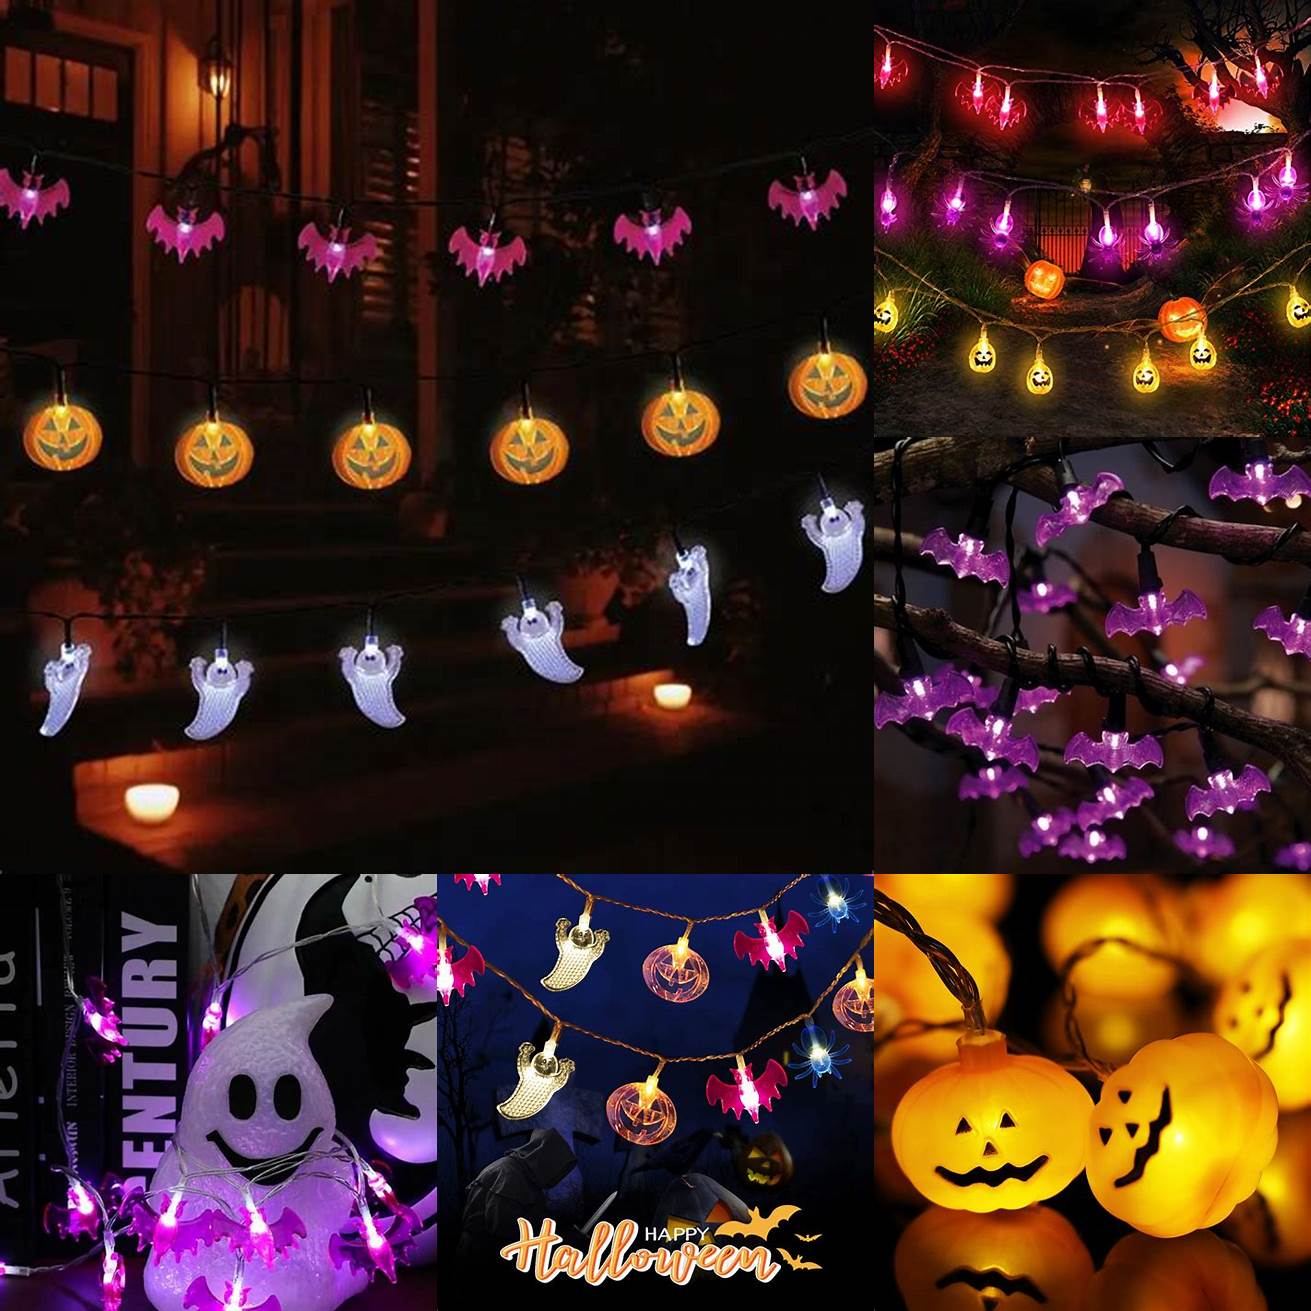 String lights in the shape of bats or pumpkins